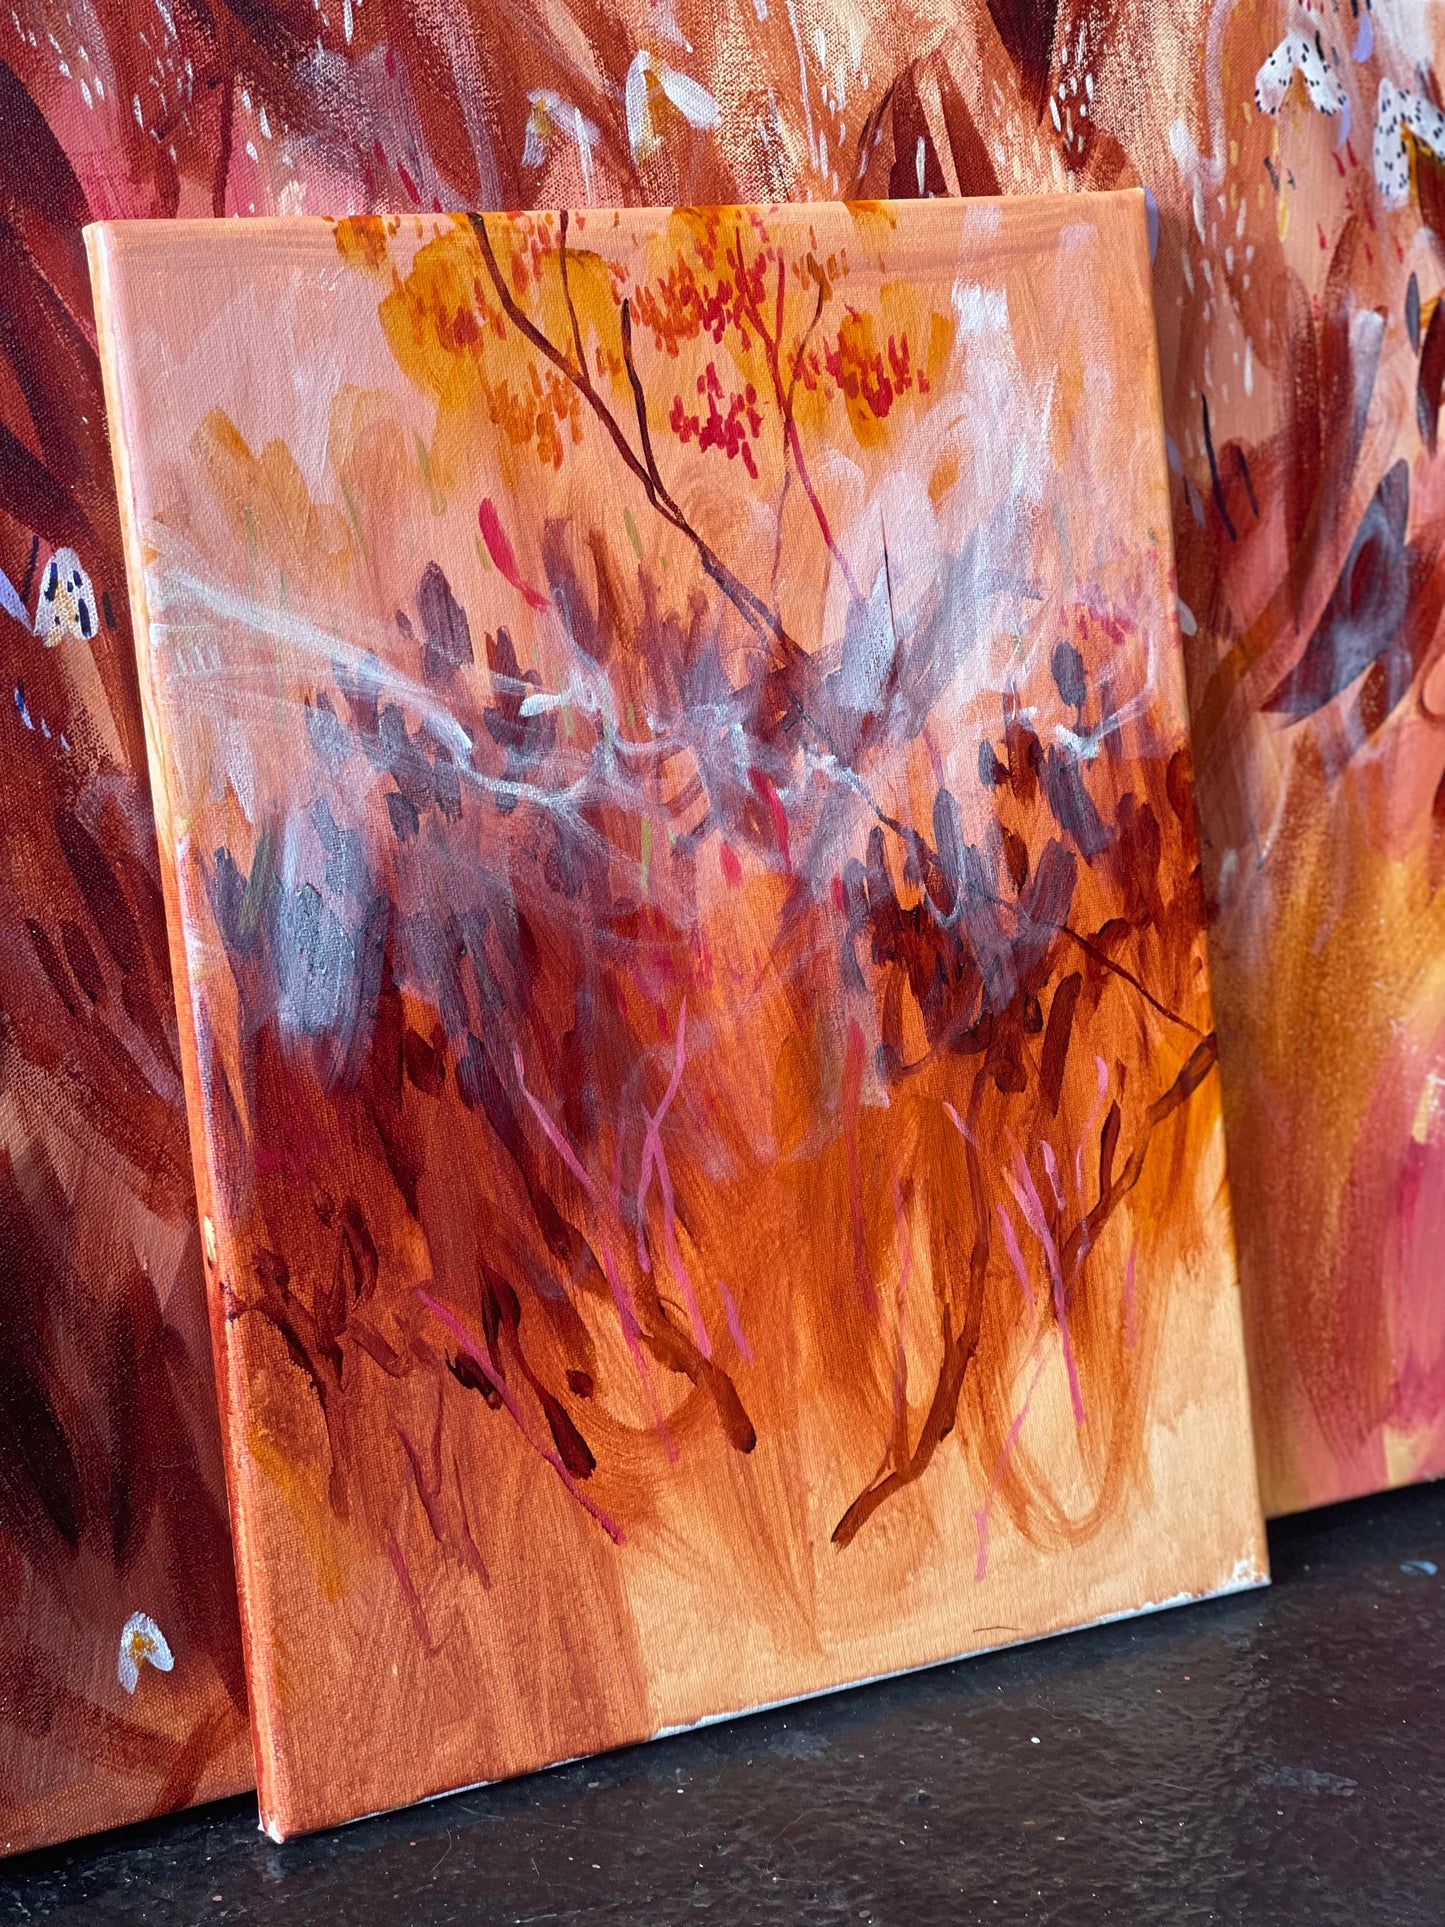 The end of fire season - acrylic artwork on canvas, 30x40cm